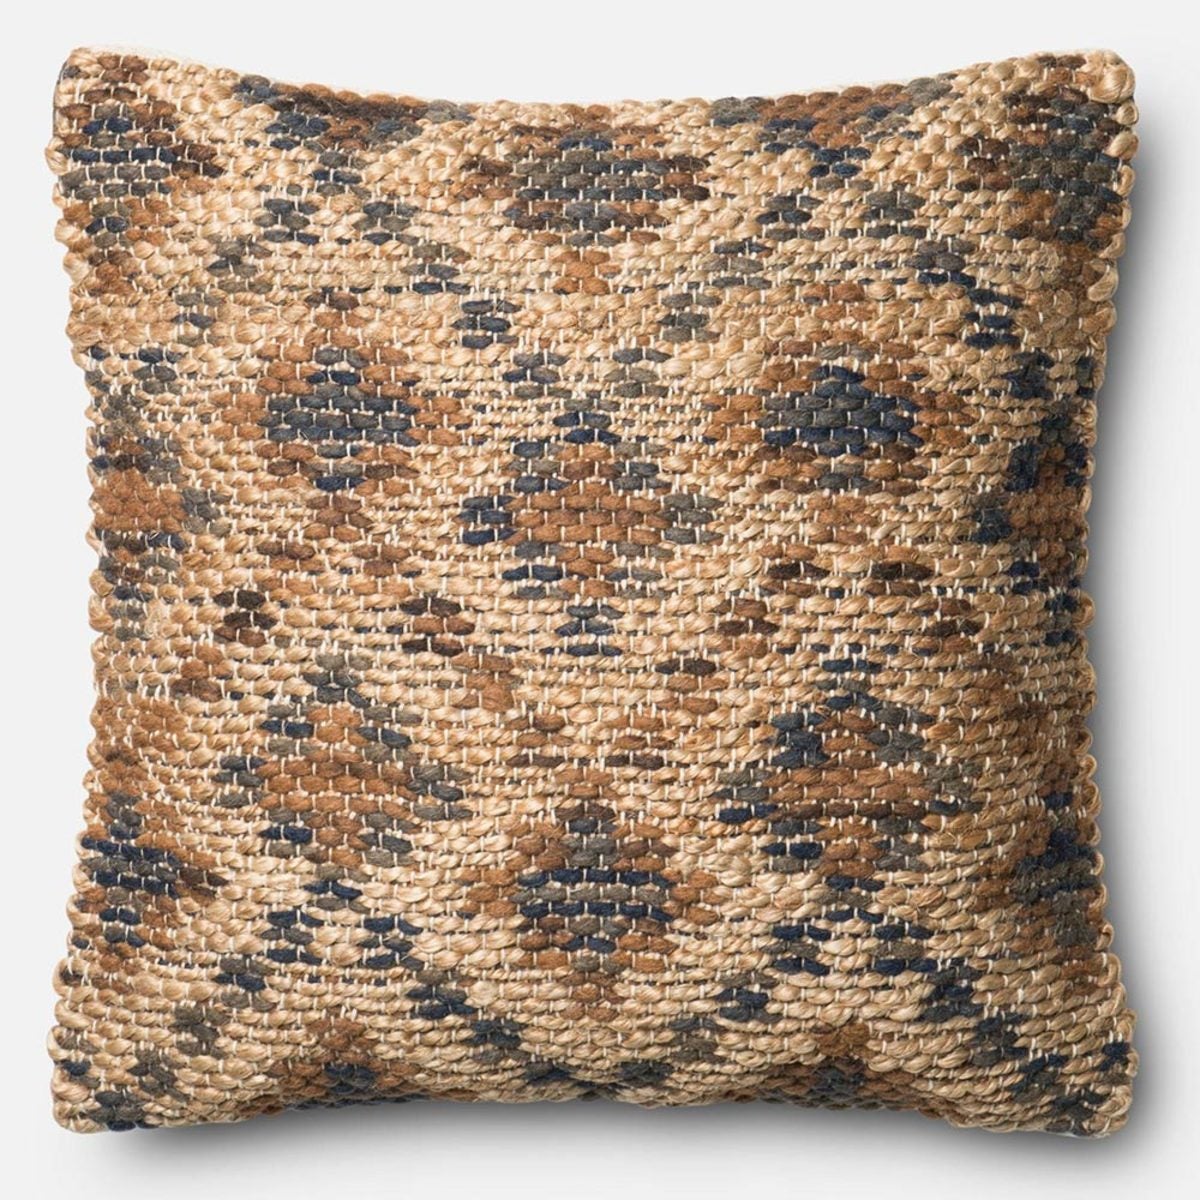 Loloi Modern Aztec Pillow Collection